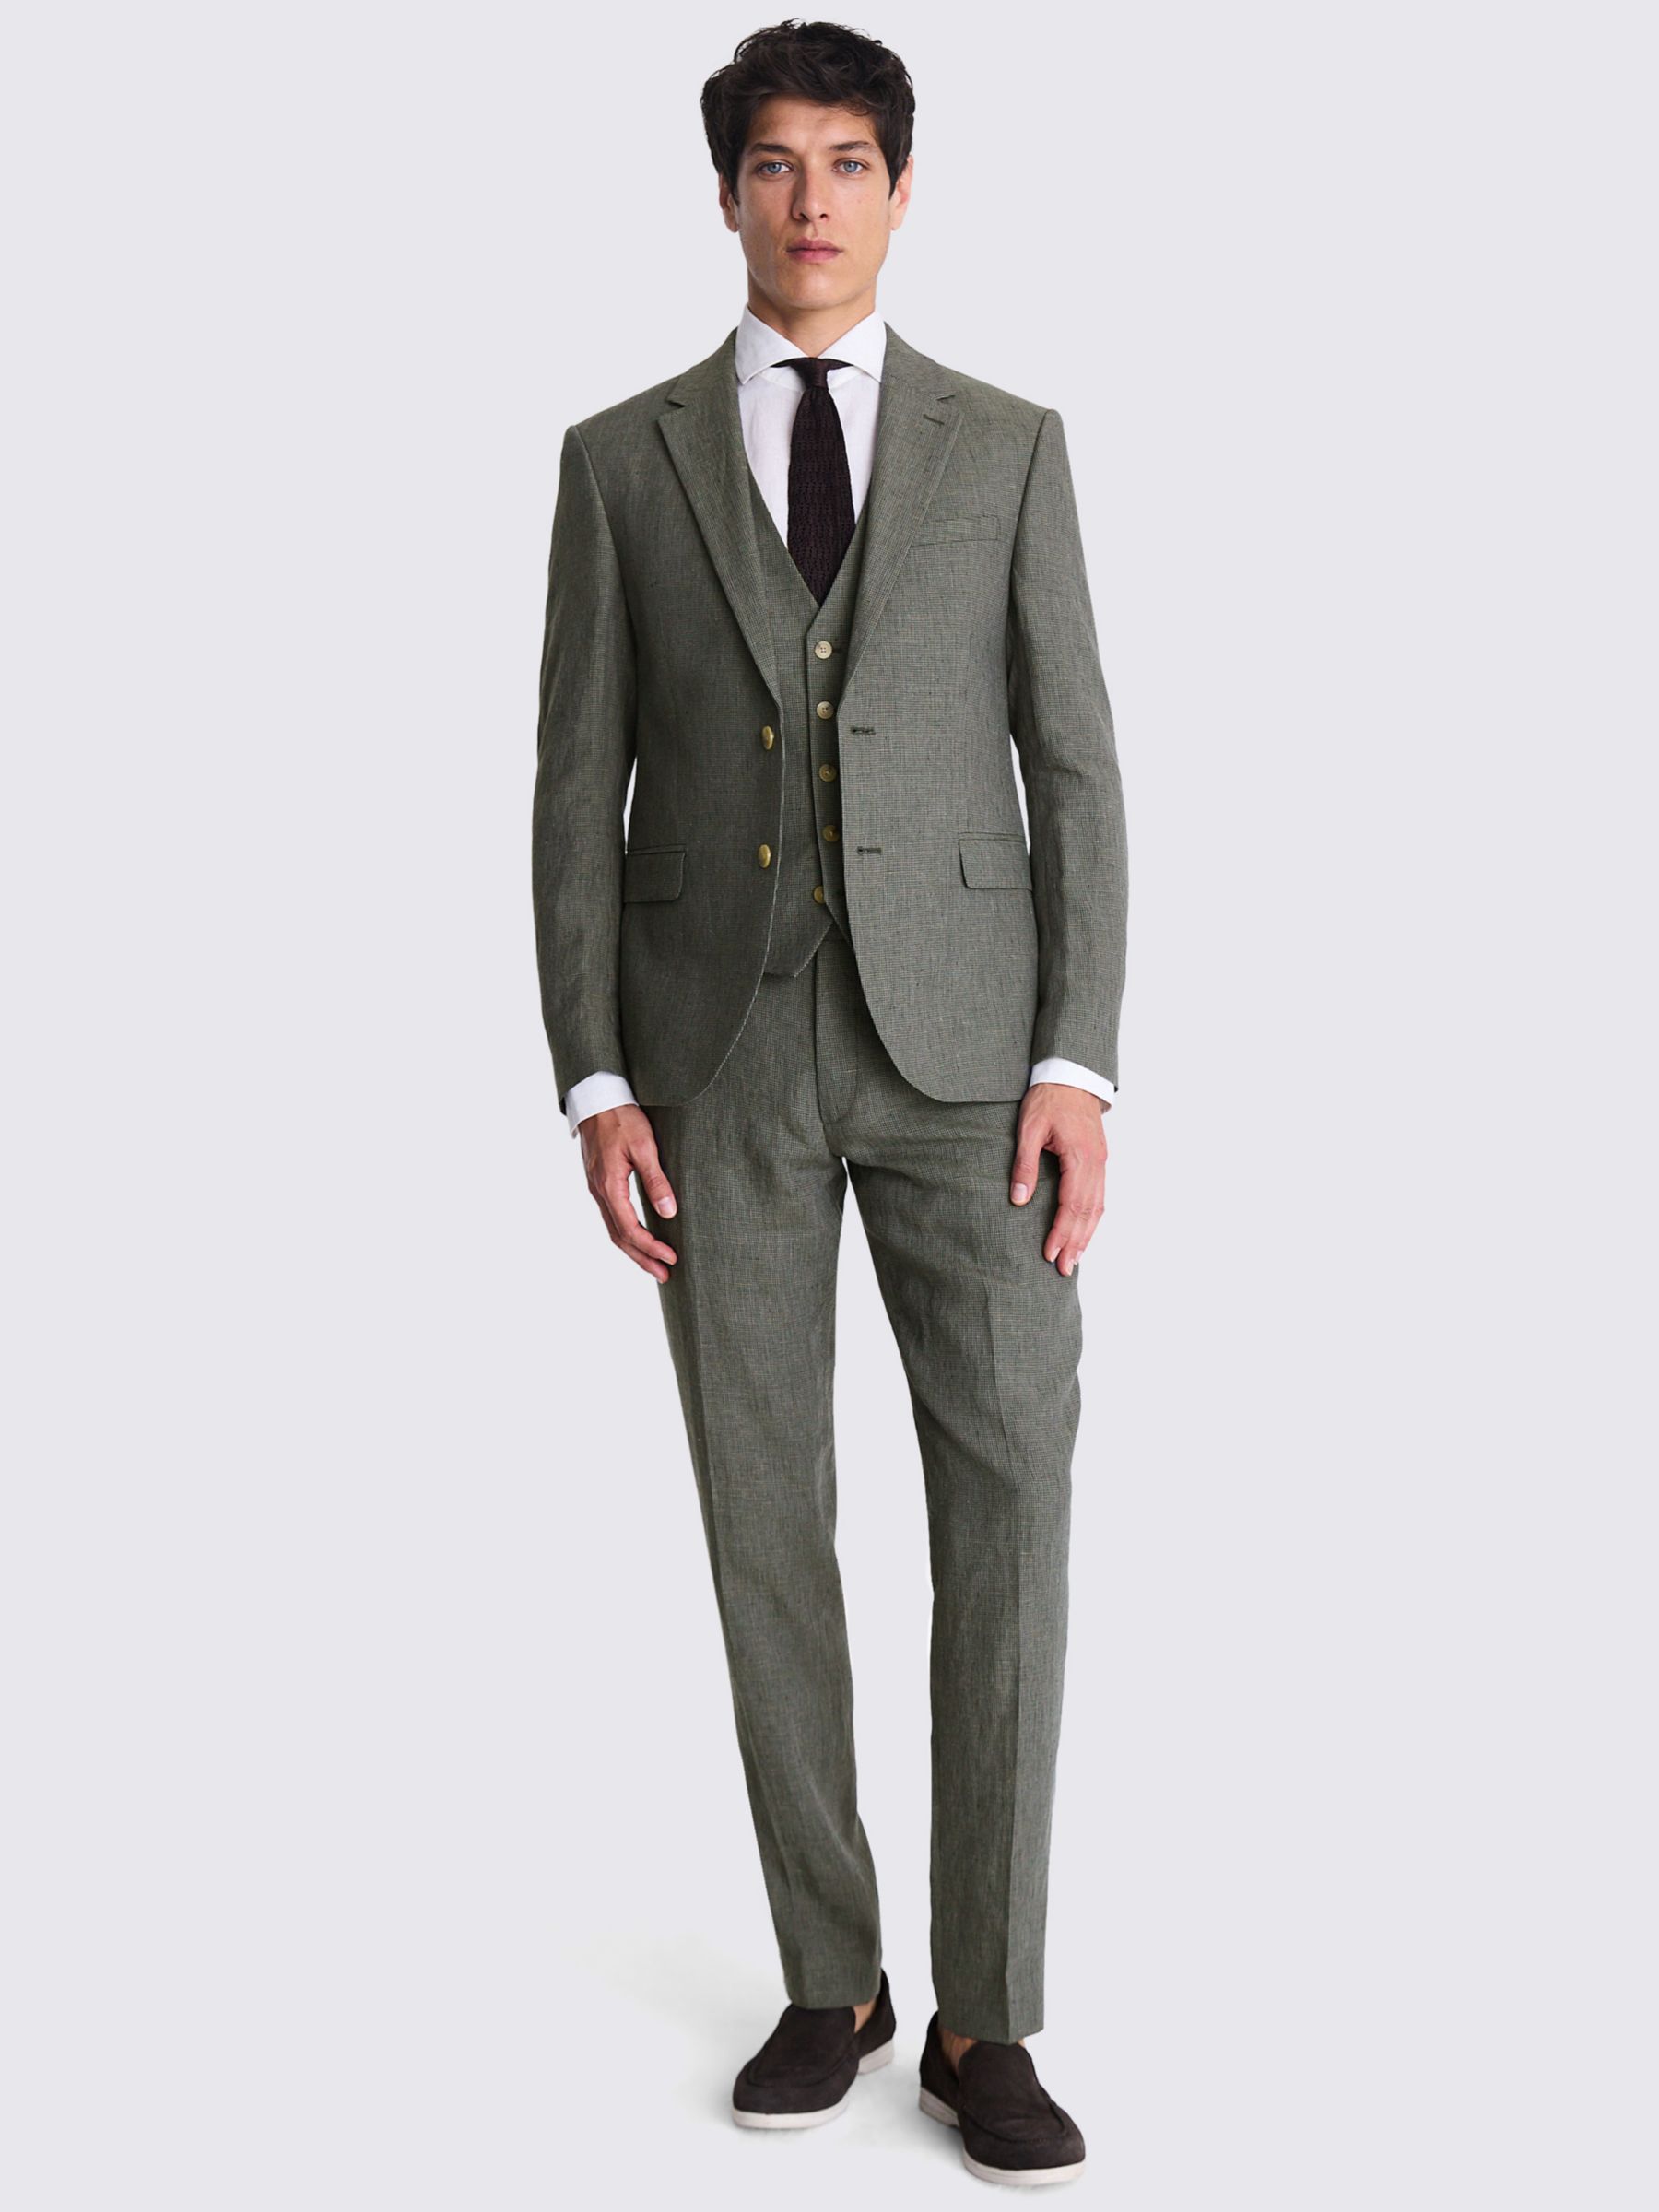 Moss Slim Fit Puppytooth Linen Suit Jacket, Green, 36R